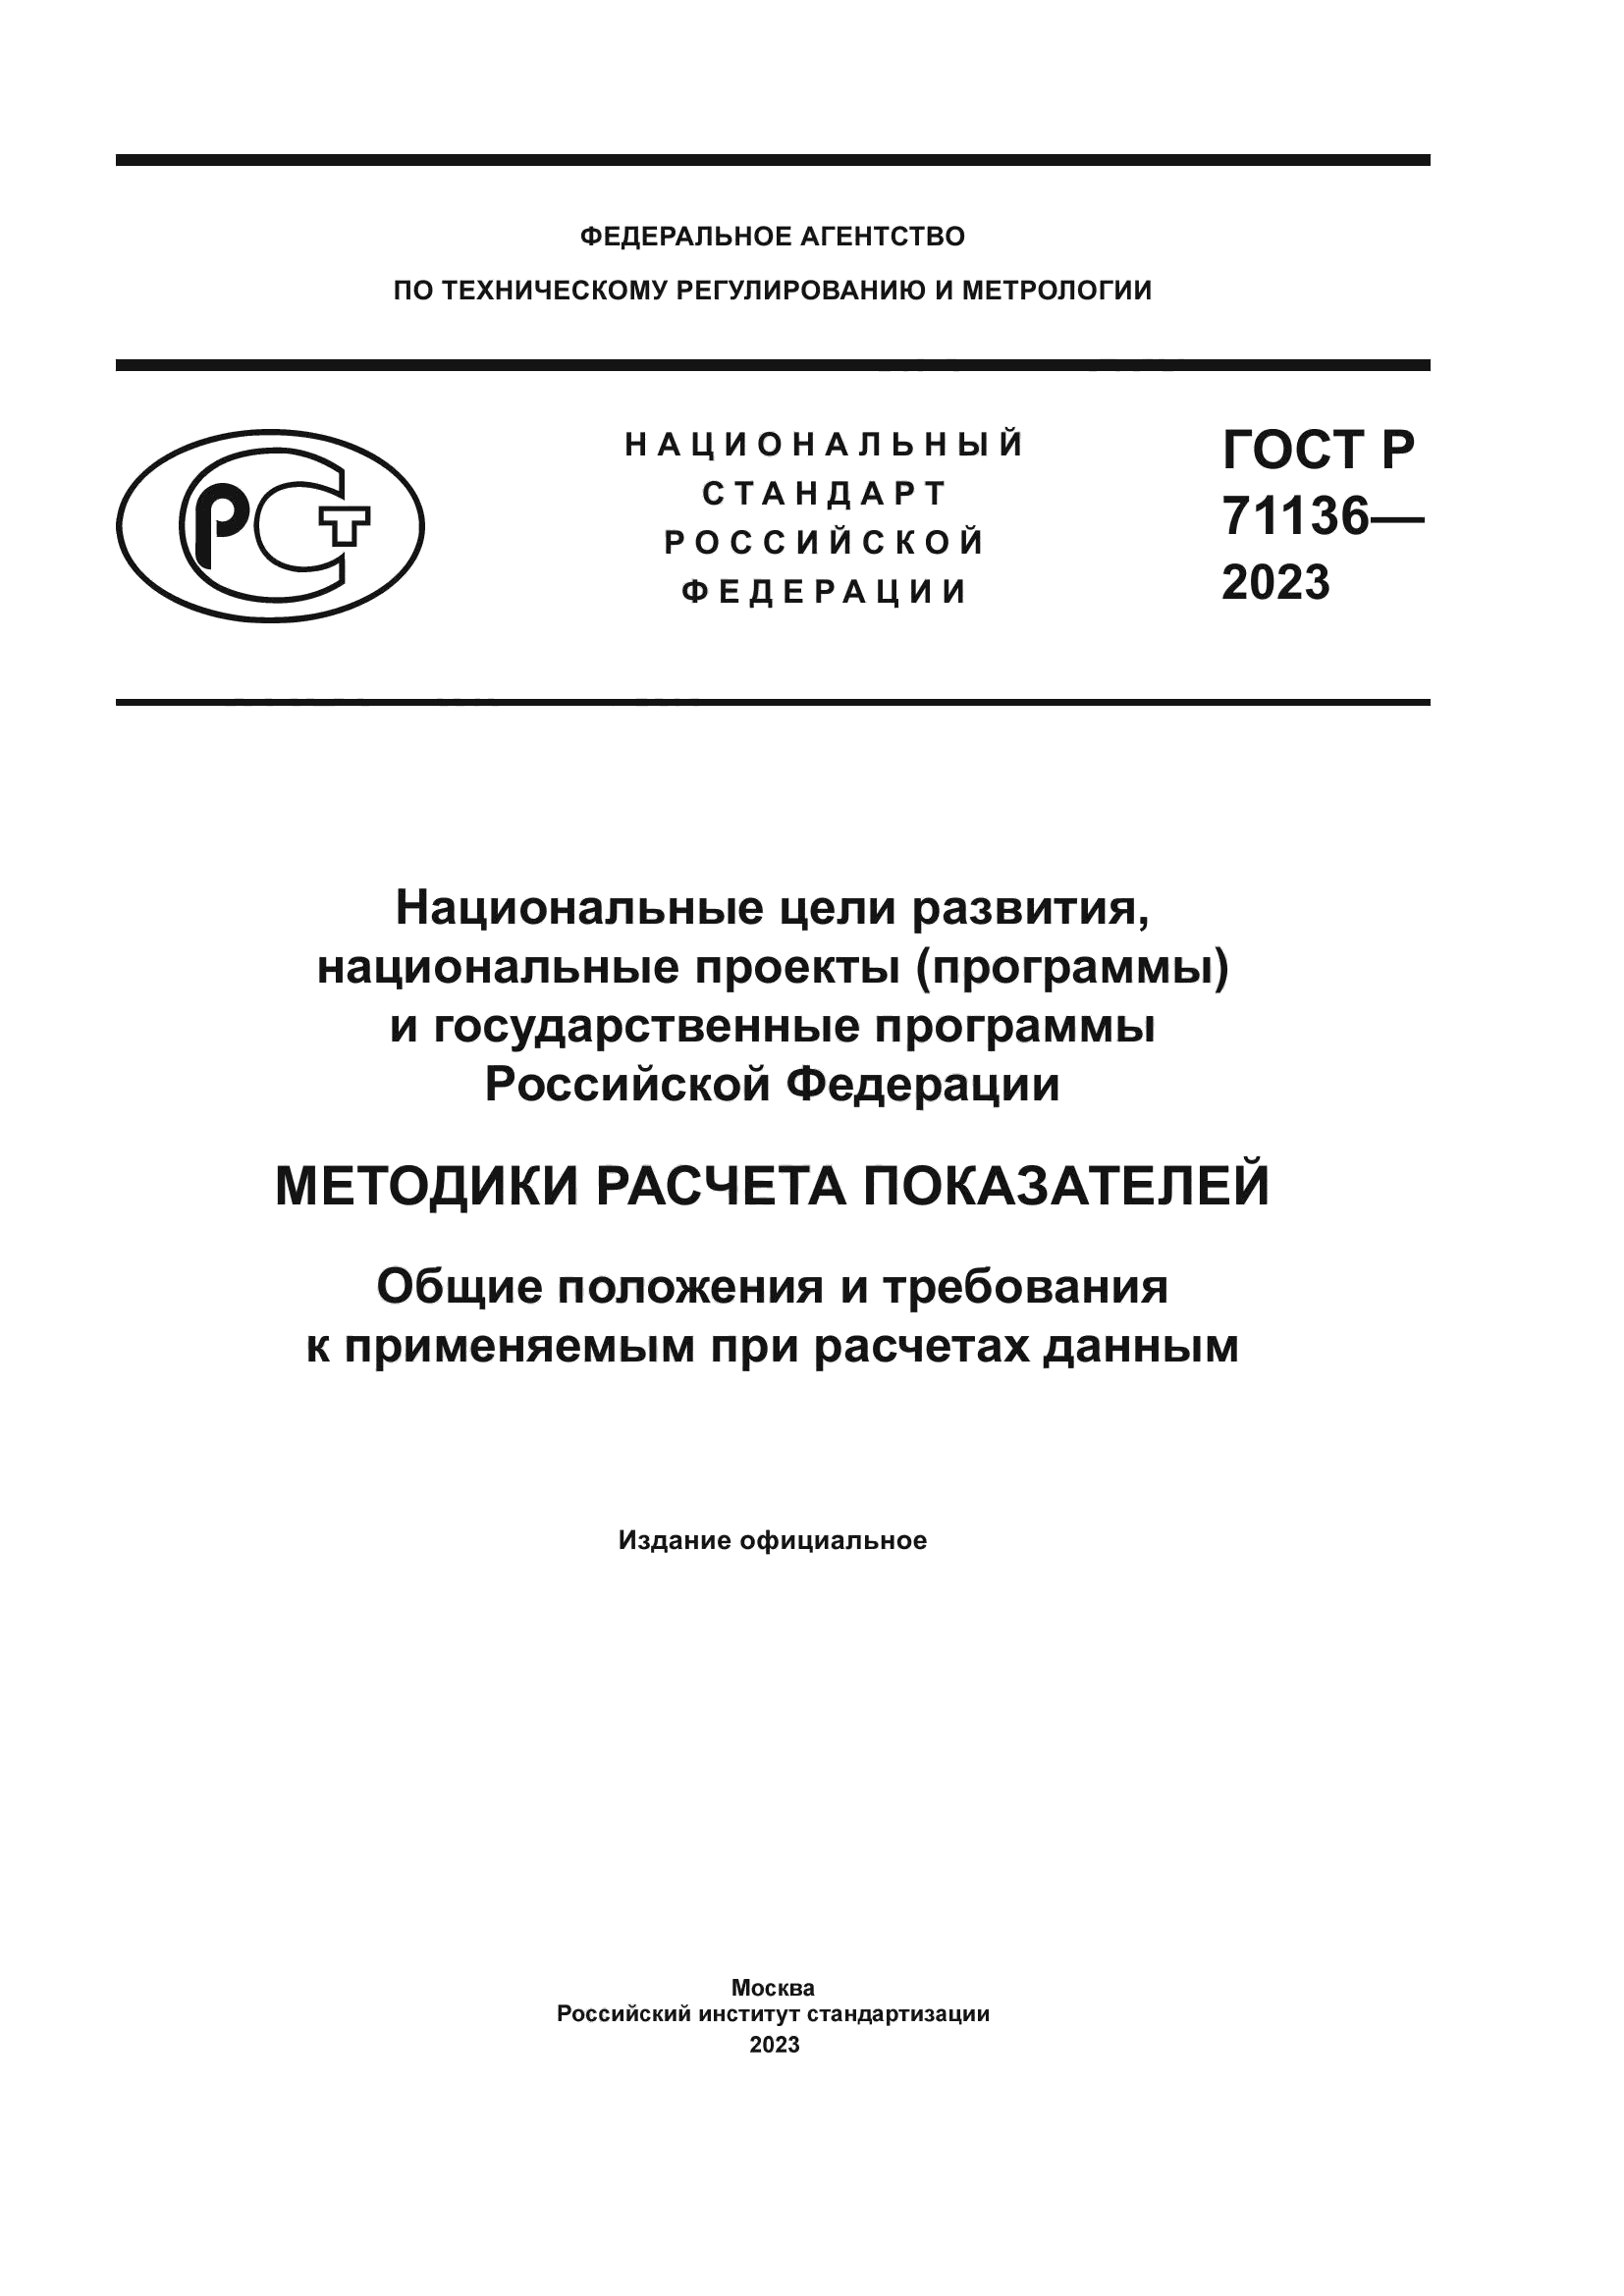 ГОСТ Р 71136-2023